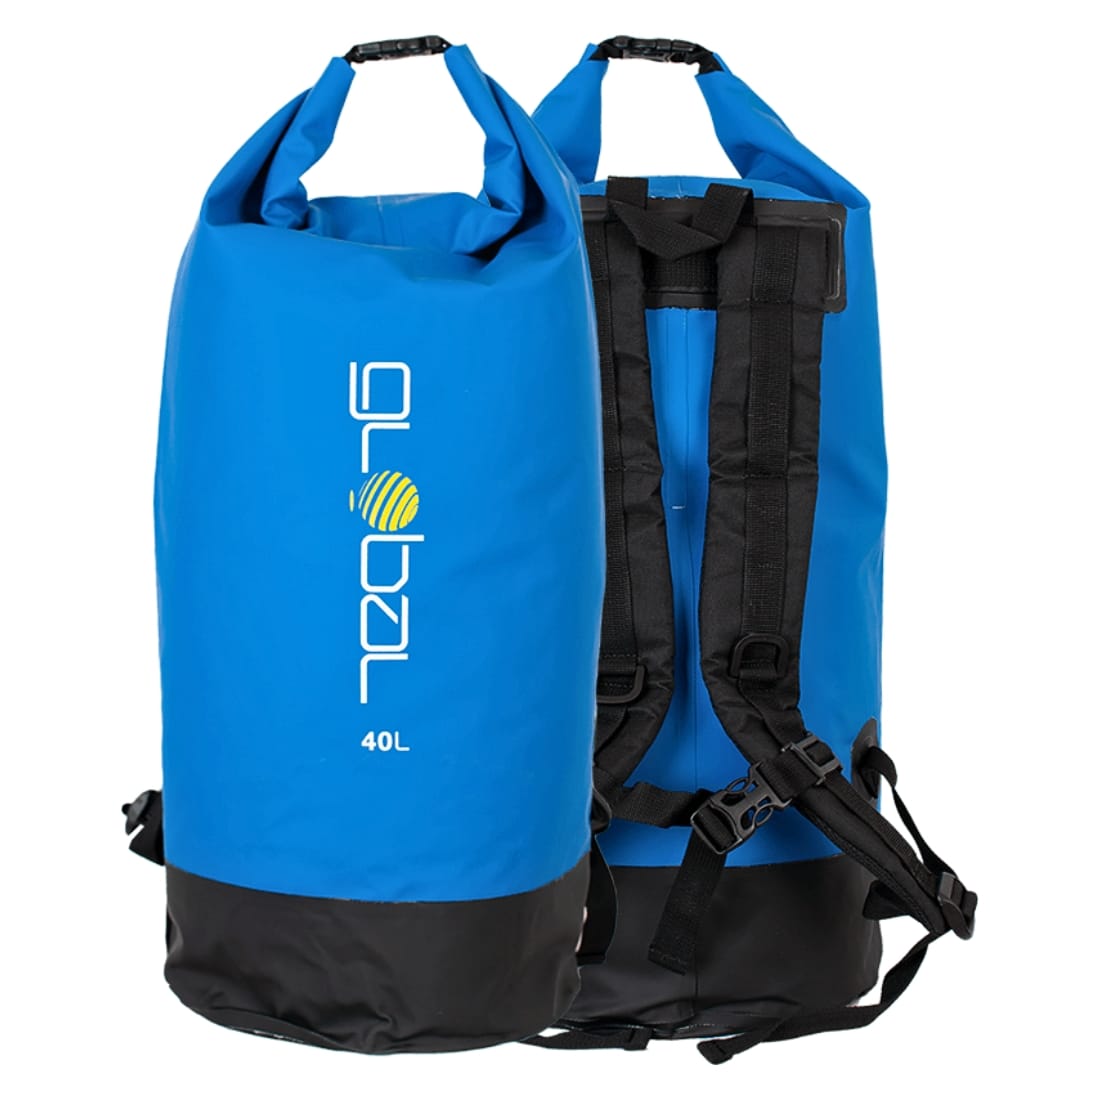 Global 40L Dry Bag Backpack - Blue - Wet/Dry Bag by Global 40L